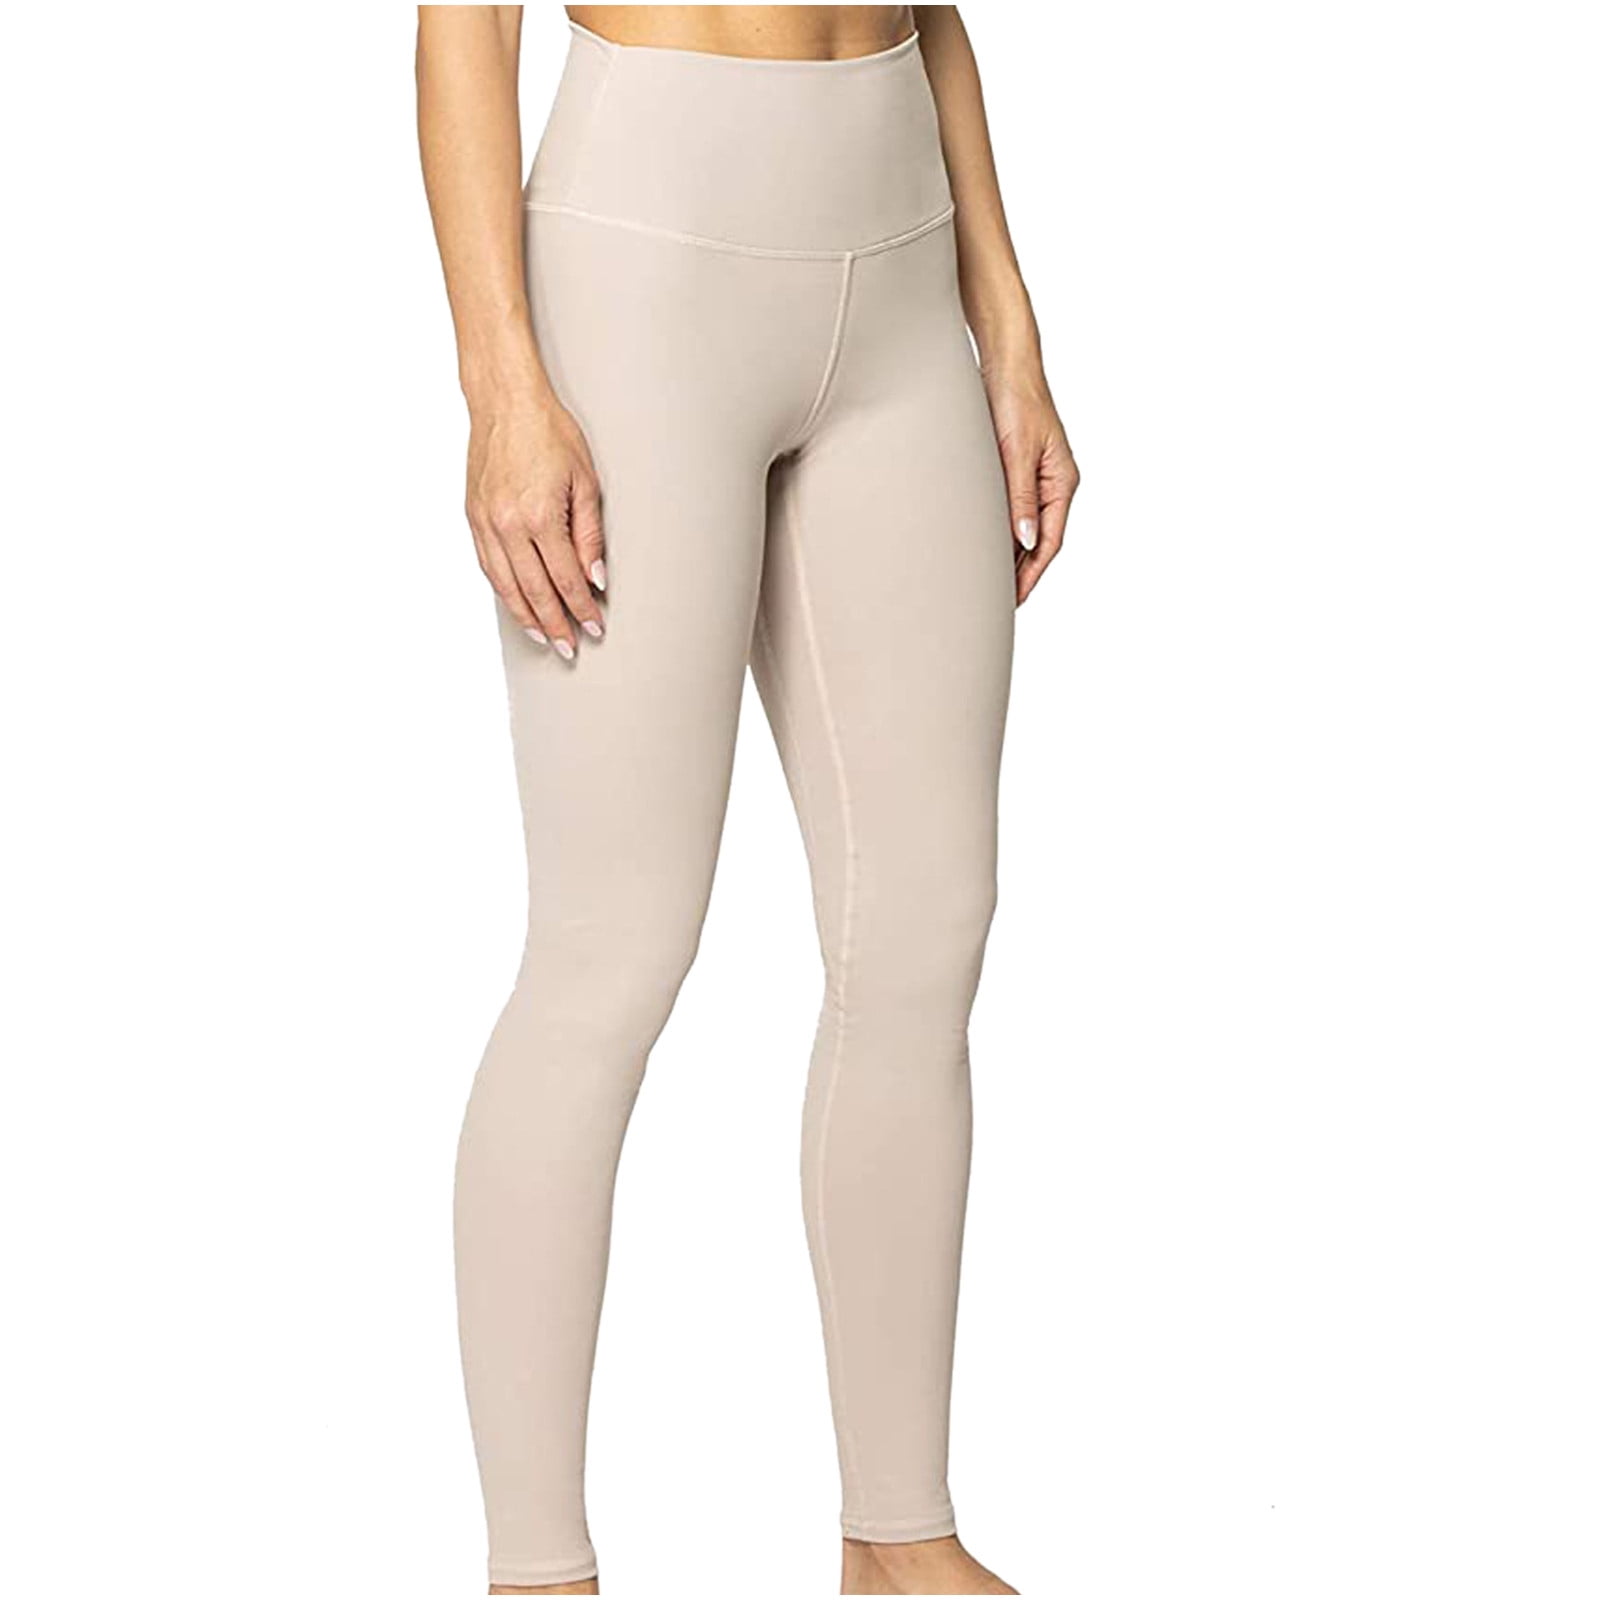 Jialili Women's High Waist Solid Color Tight Fitness Yoga Pants Nude Hidden Yoga  Pants Beige S - Walmart.com